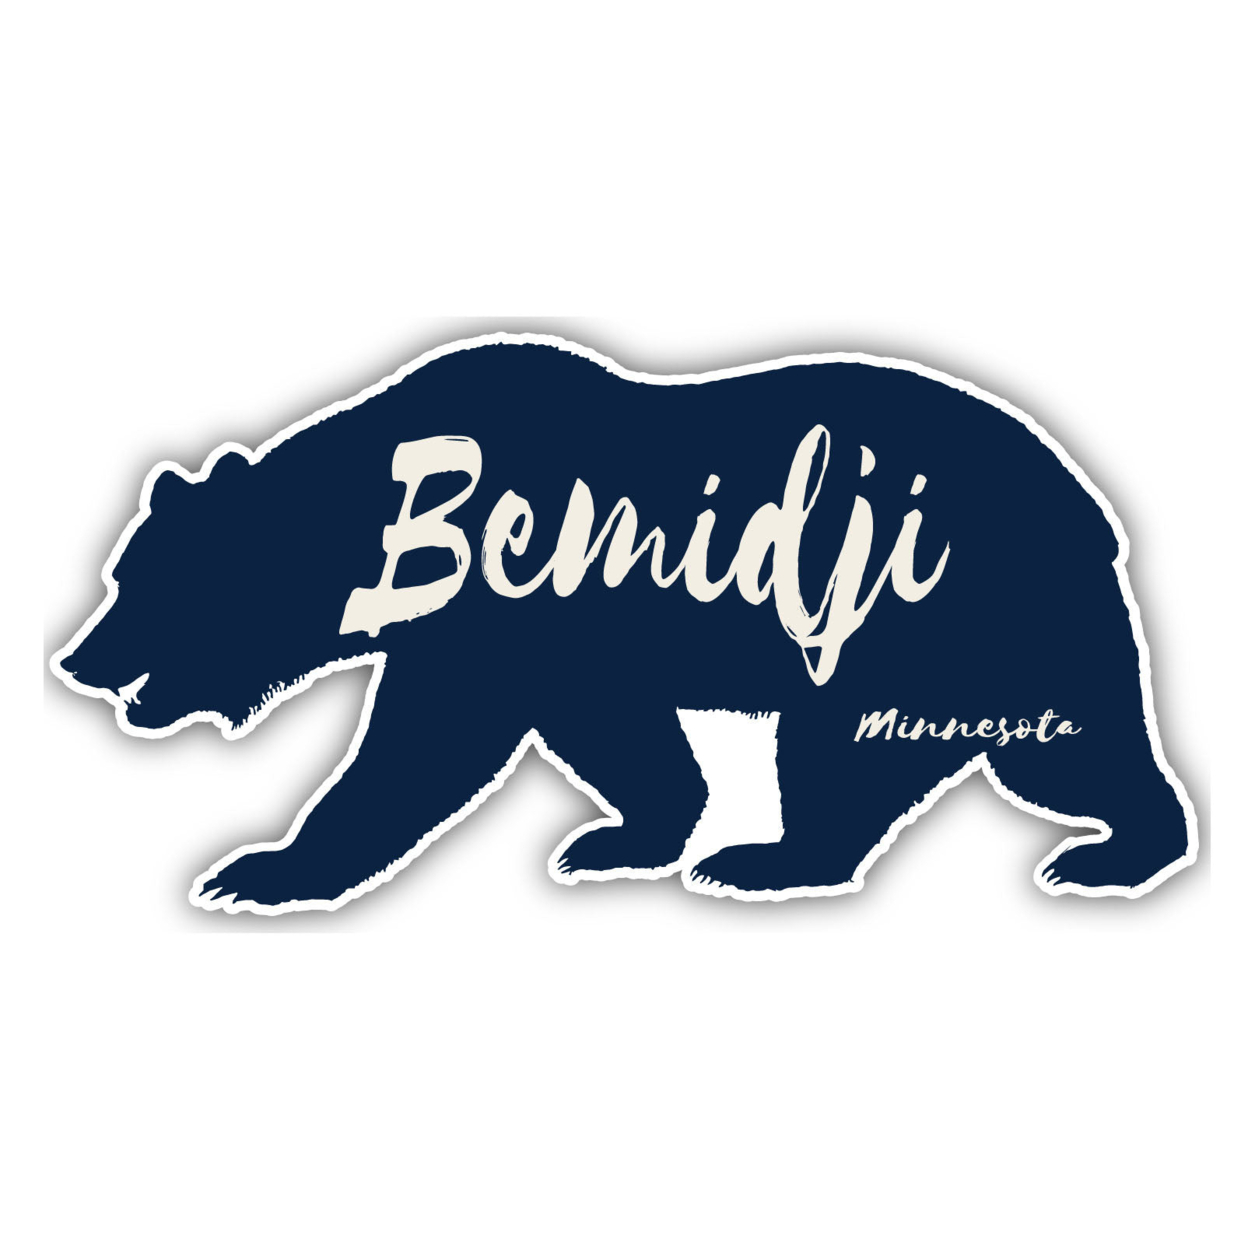 Bemidji Minnesota Souvenir Decorative Stickers (Choose Theme And Size) - 4-Pack, 10-Inch, Tent